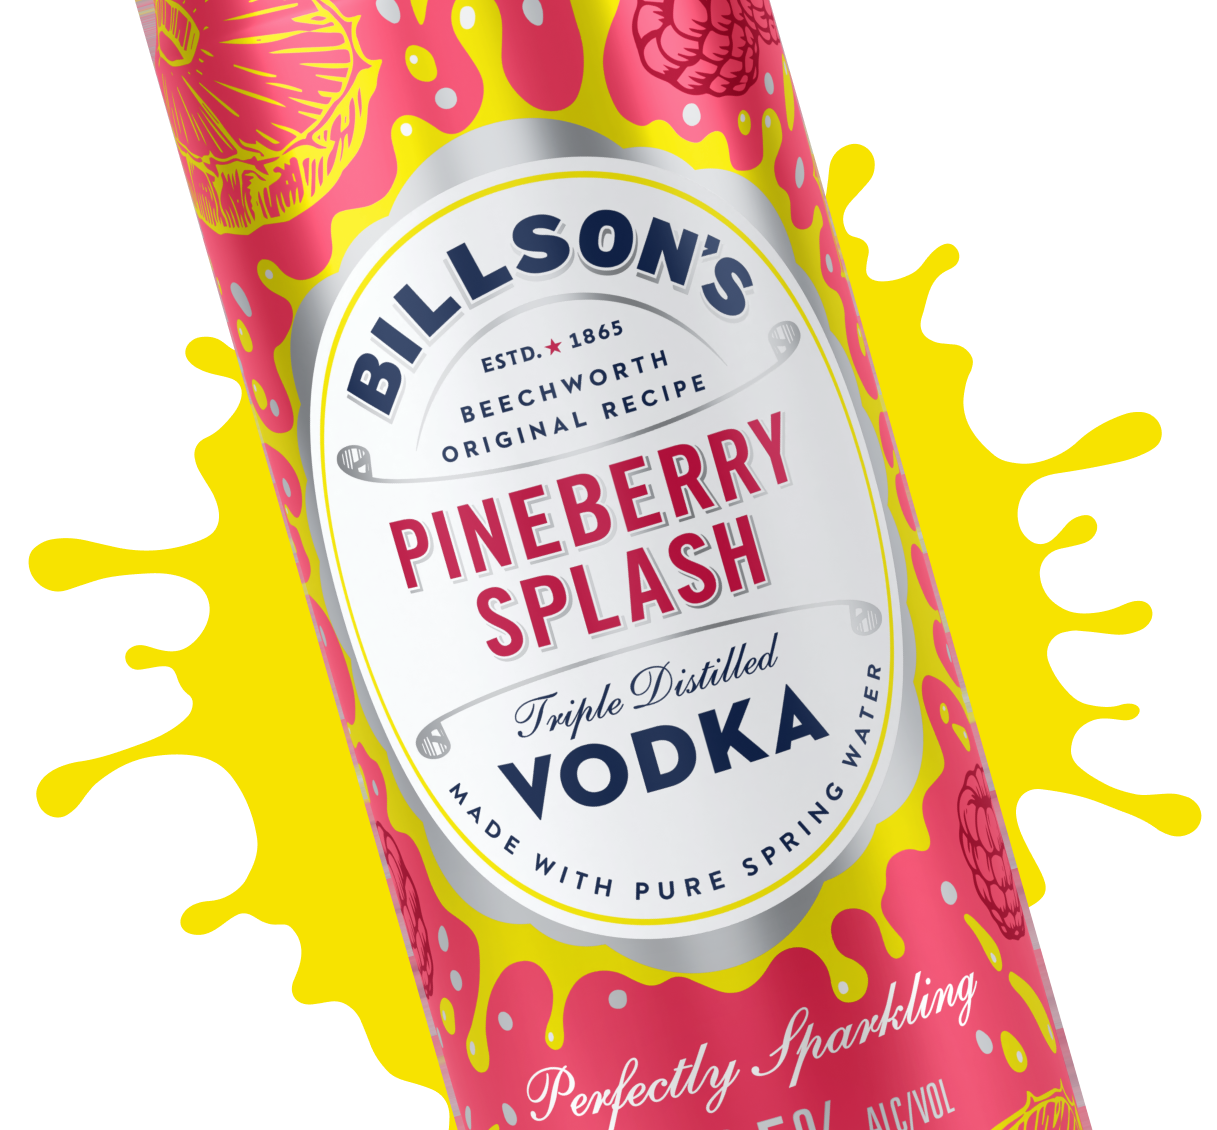 Premixed Vodka with Pineberry Splash